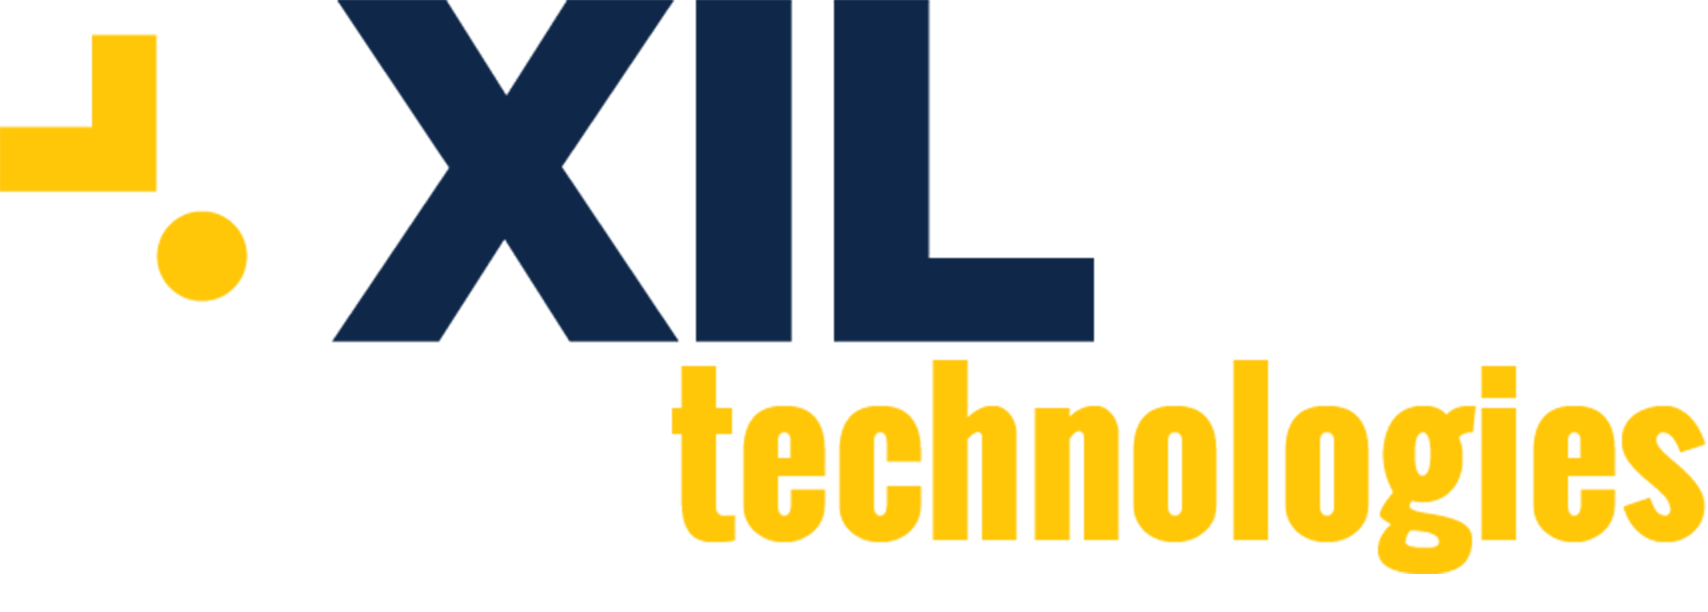 XIL Technologies Home Logo